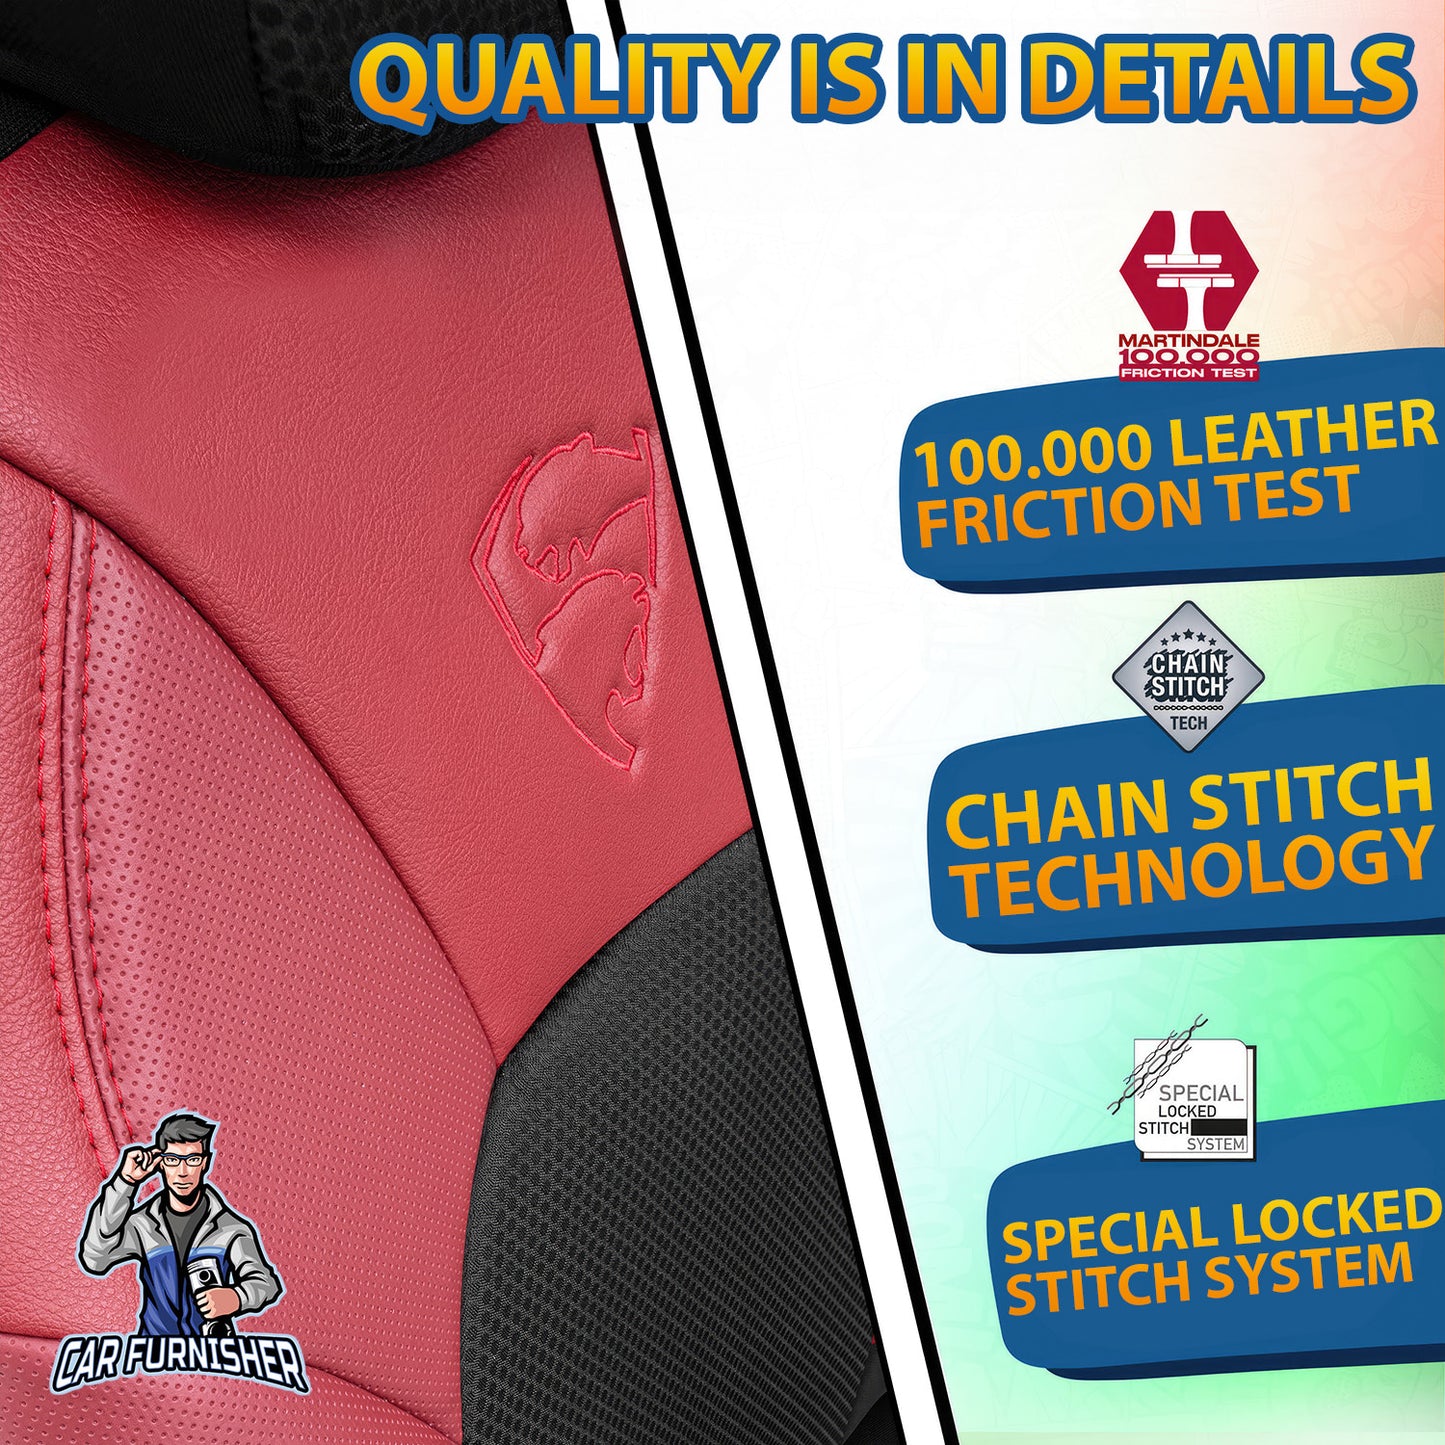 Car Seat Cover Set - Phantom Design Burgundy 5 Seats + Headrests (Full Set) Leather & Jacquard Fabric